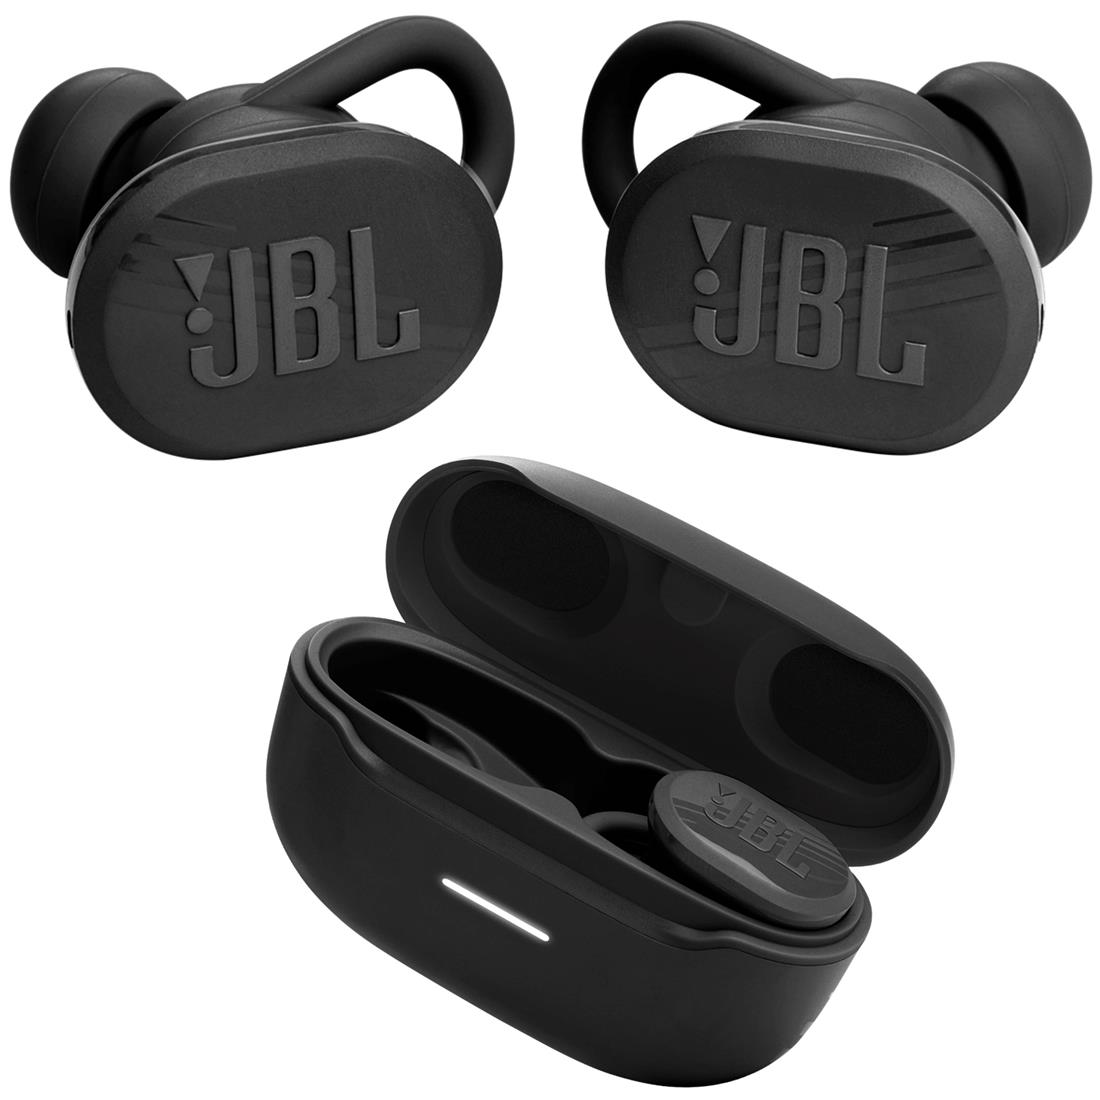  JBL Endurance Race - Auriculares deportivos